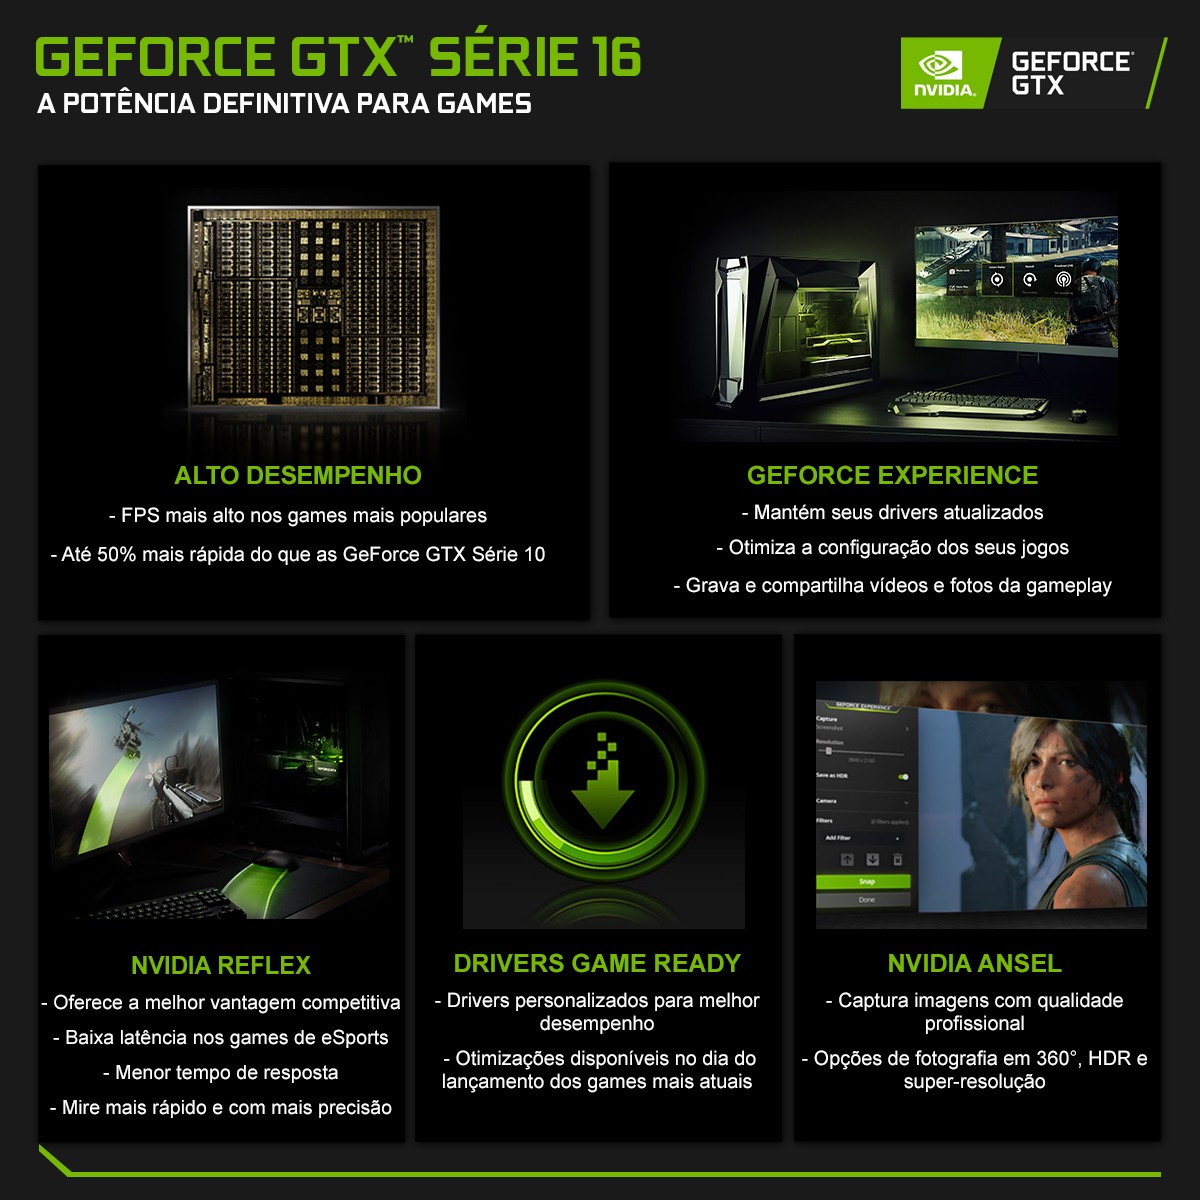 Placa de Vídeo Palit NVIDIA GeForce GTX 1660 Dual, 6GB, GDDR5, 192bit, NE51660018J9-1161C - Open Box